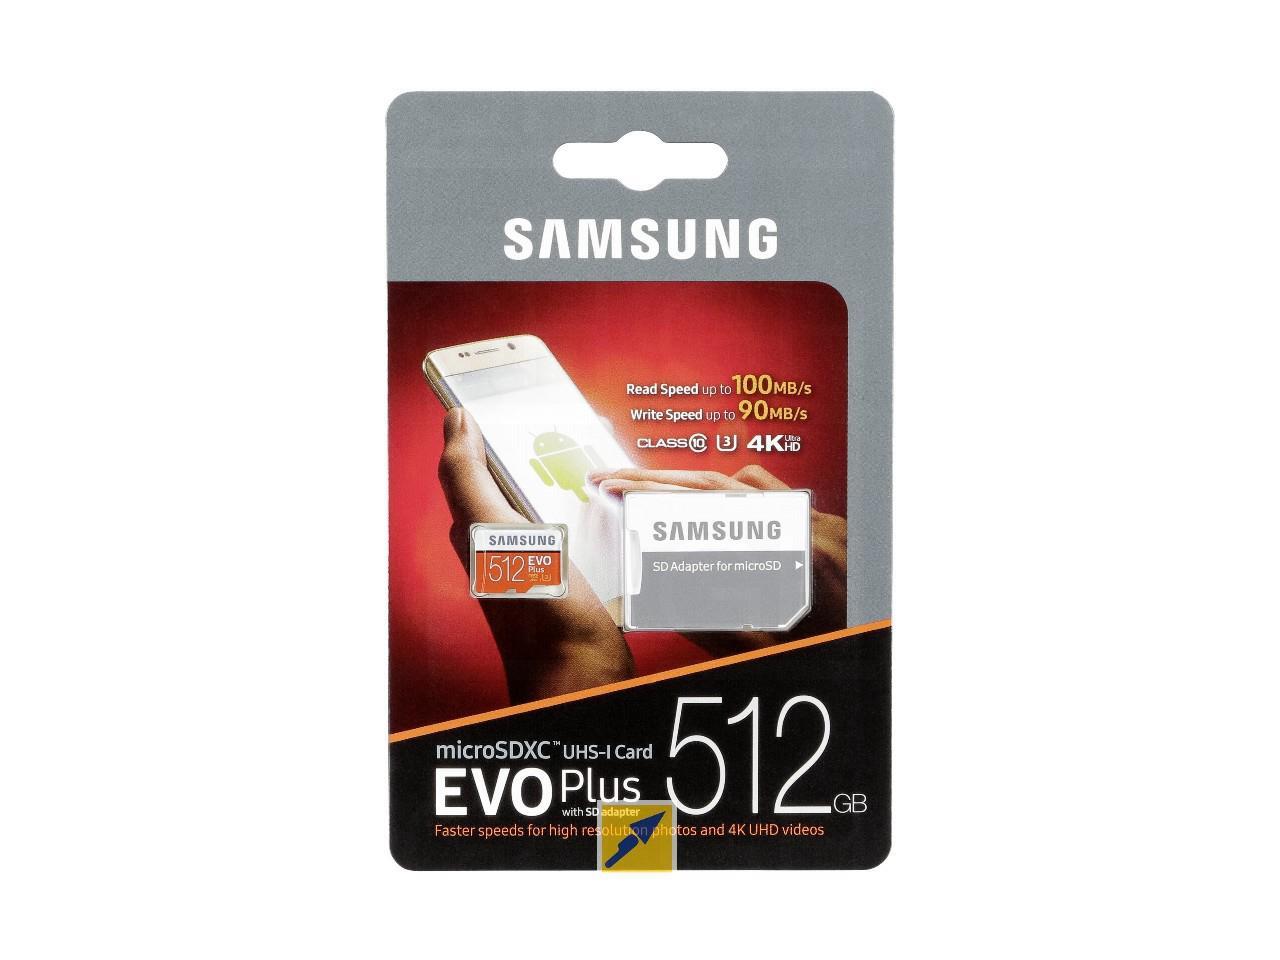 Kamp Andre steder stabil SAMSUNG EVO Plus 512GB microSDXC Memory Card Model MB-MC512G UHS-3/U3 Speed  Up to 100MB/s - Newegg.com